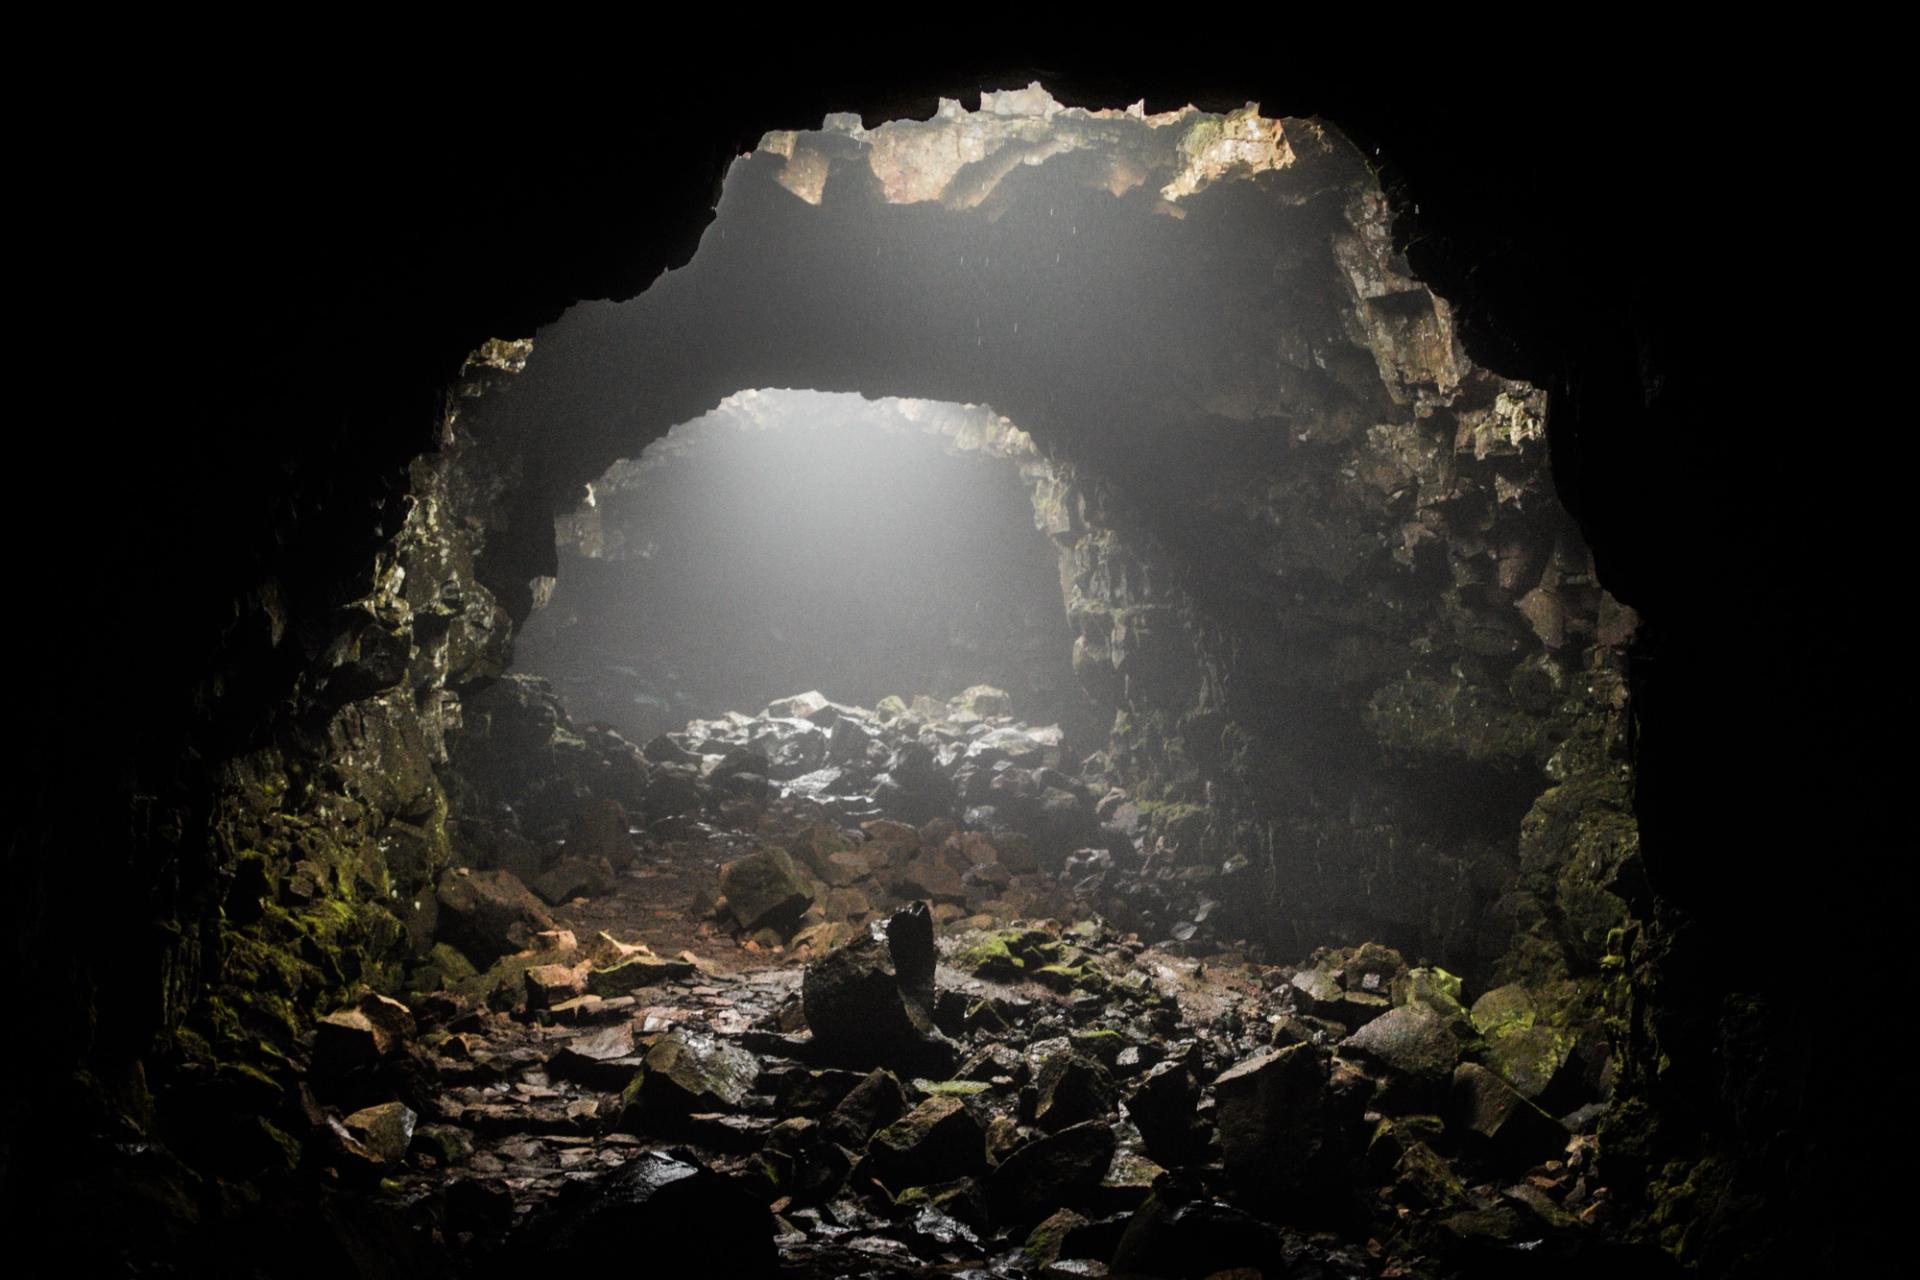 Illuminated interior of Raufarhólshellir lava tube in South Iceland.